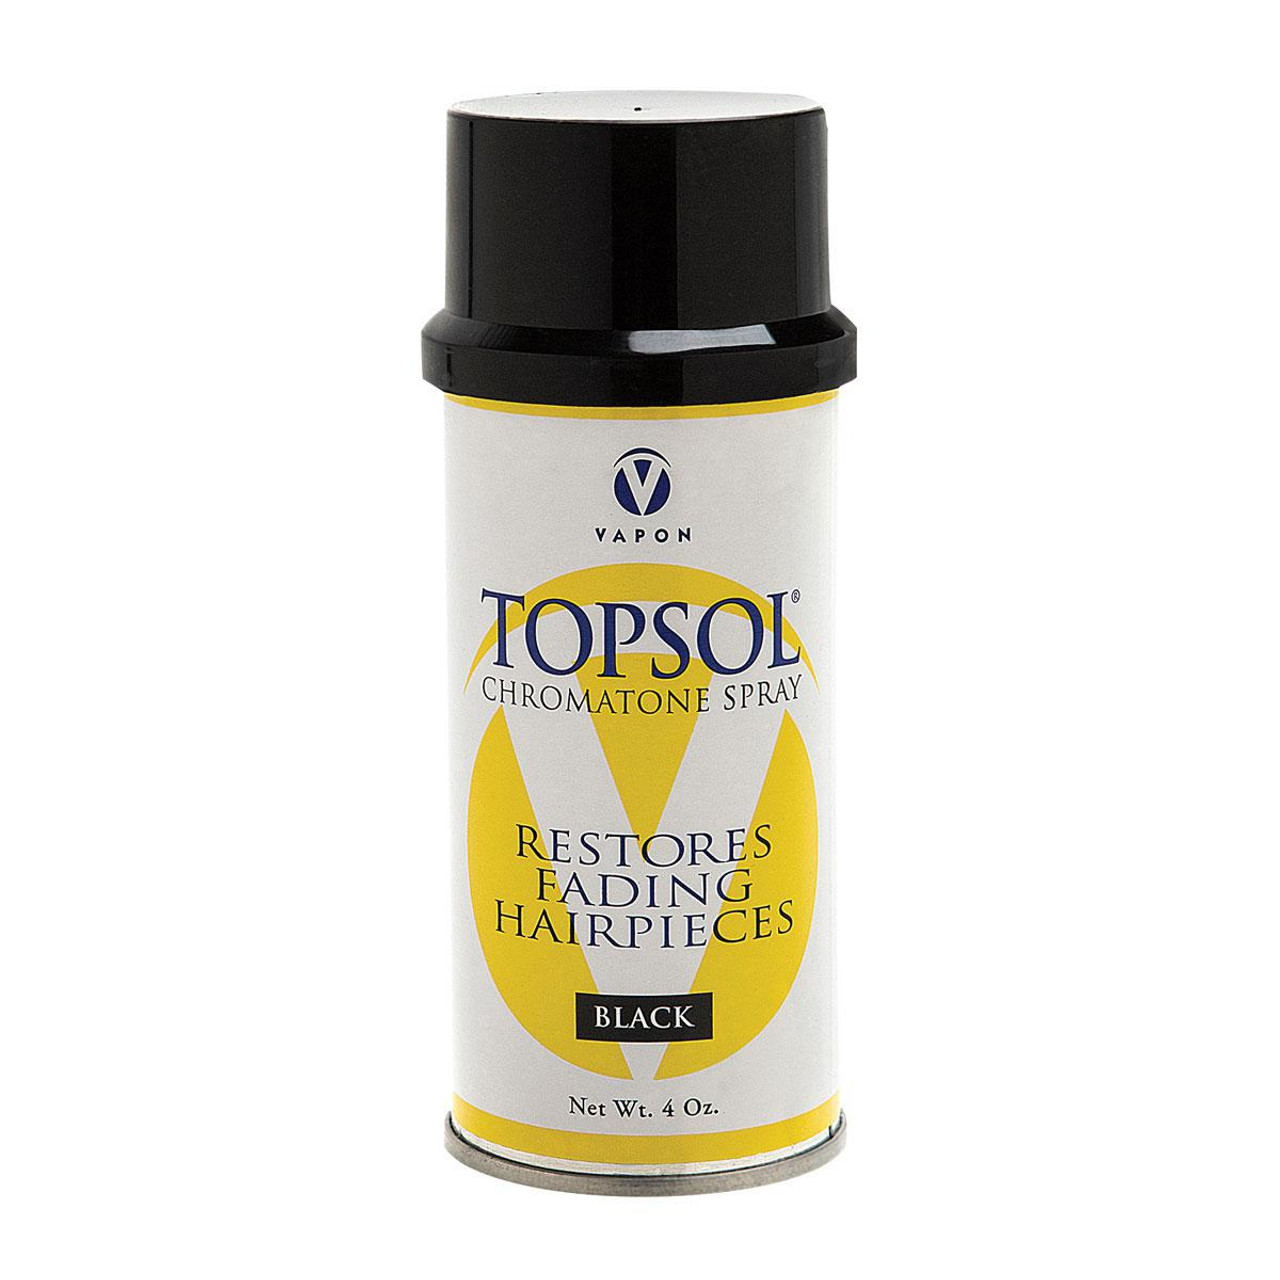 Topsol Chromatone Spray